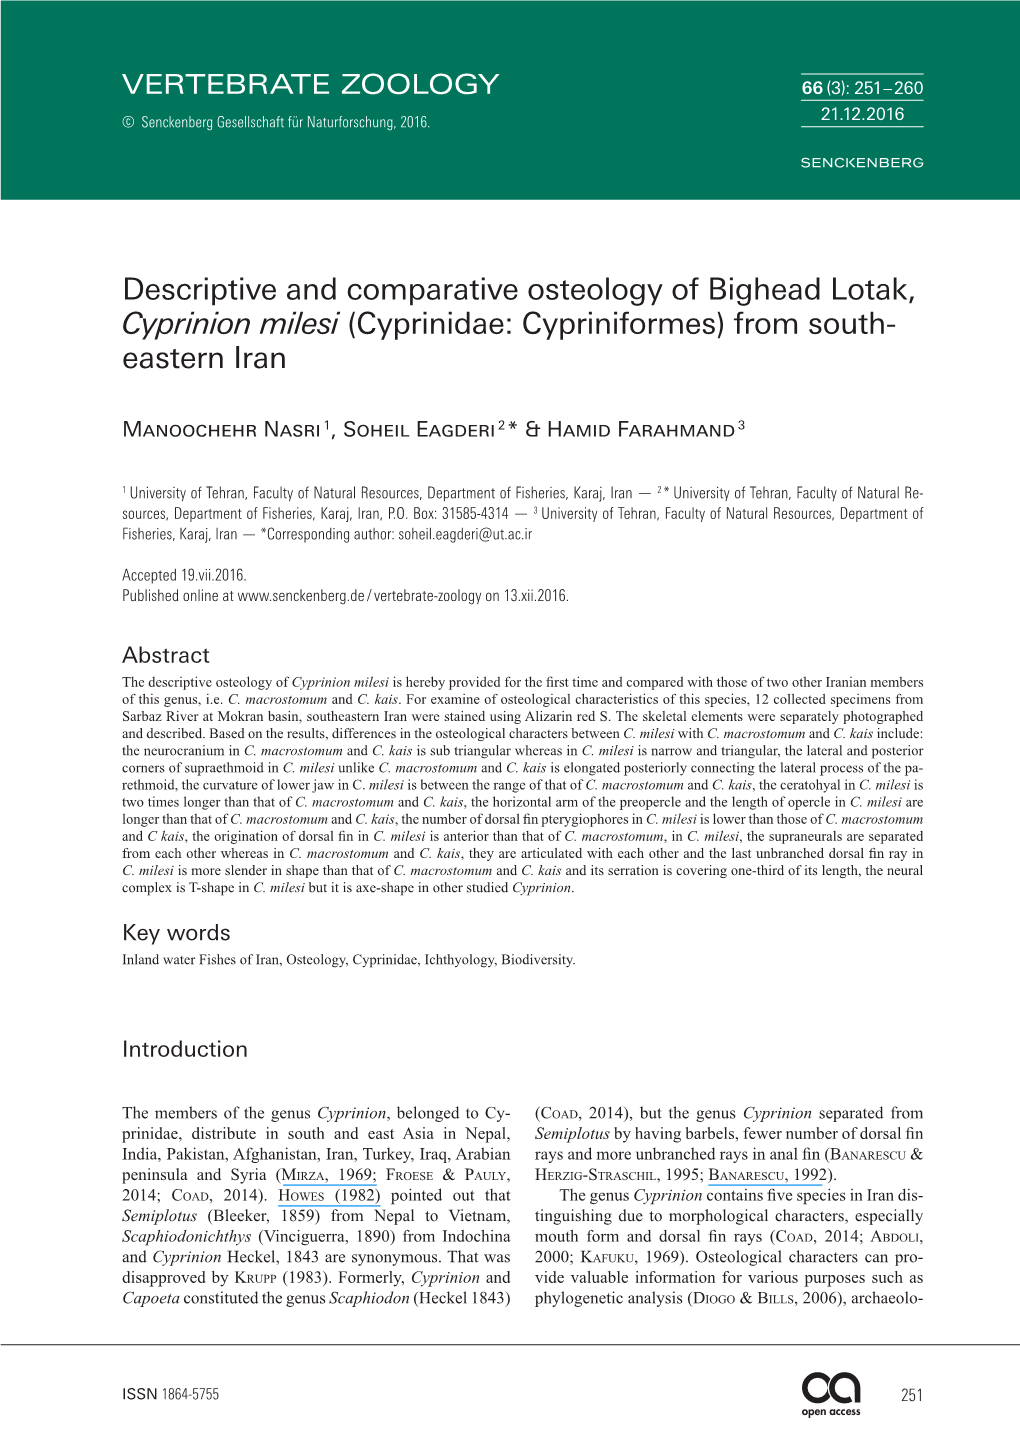 Descriptive and Comparative Osteology of Bighead Lotak, Cyprinion Milesi (Cyprinidae: Cypriniformes) from South- Eastern Iran